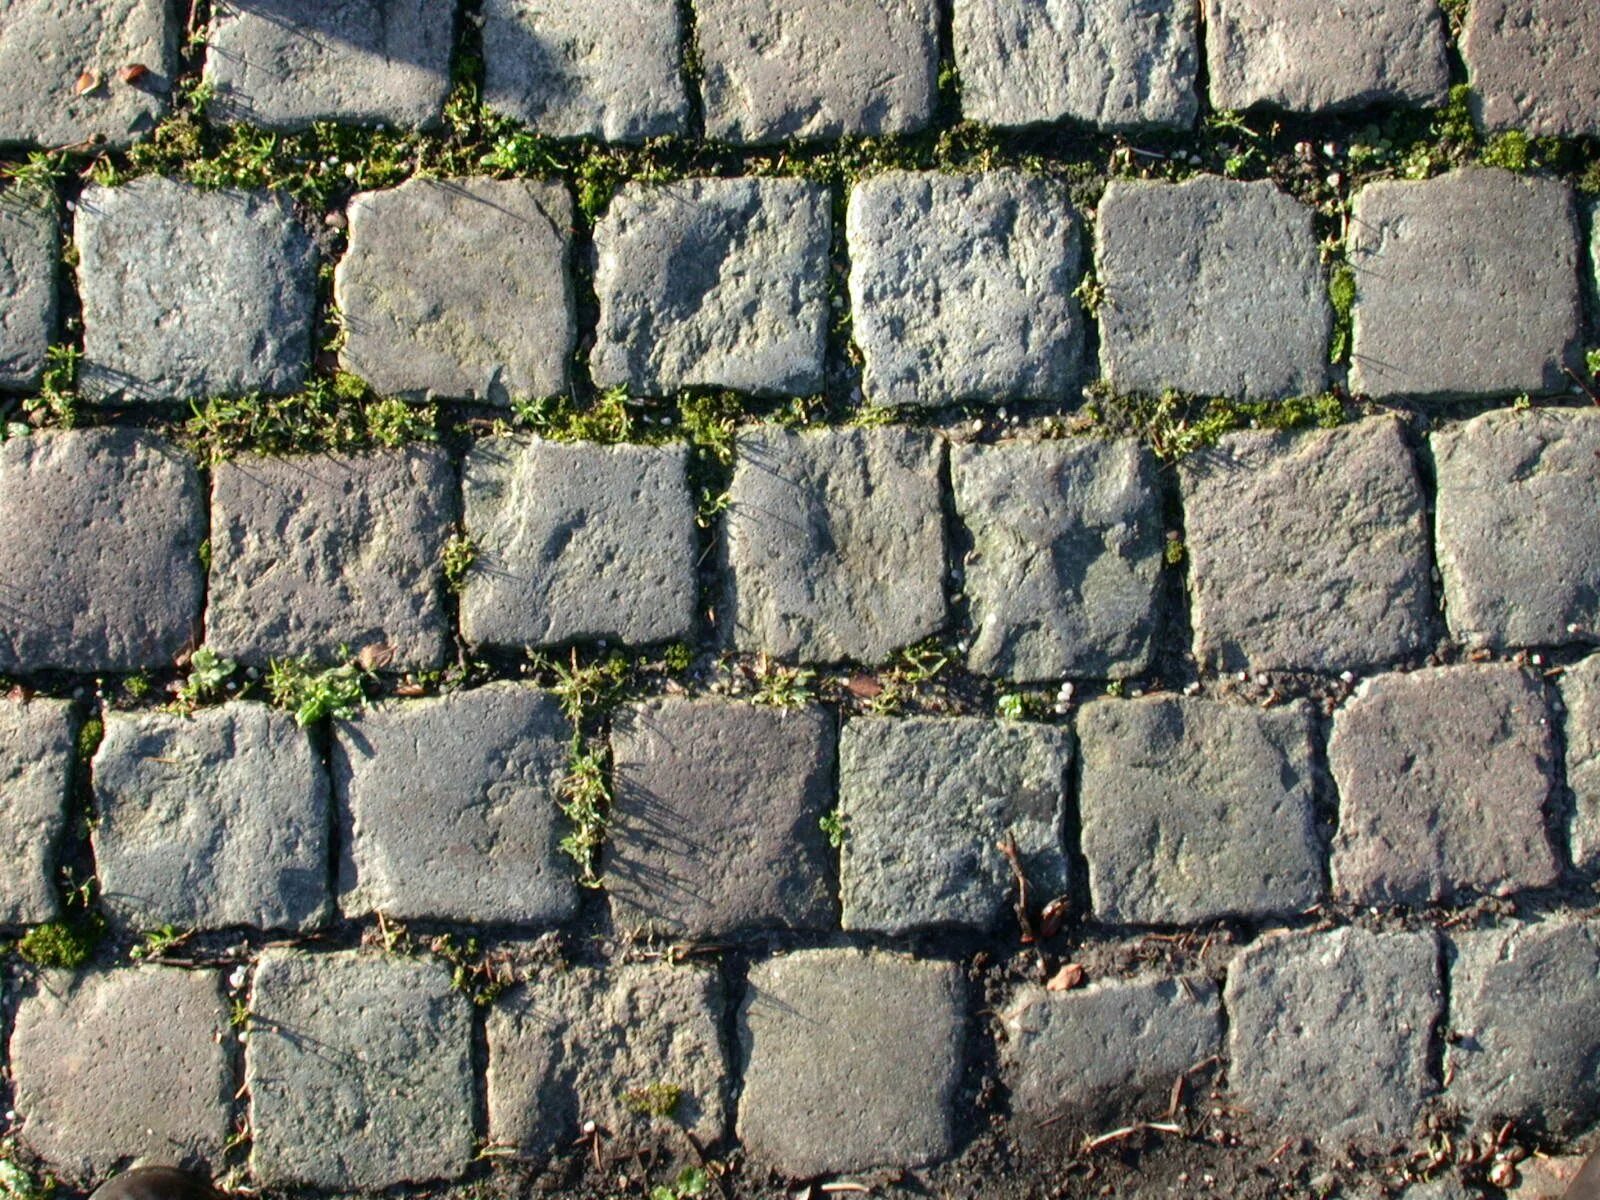 Ground stone. Cobblestone камень. Тротуар текстура. Каменный тротуар текстура. Cobblestone текстура.